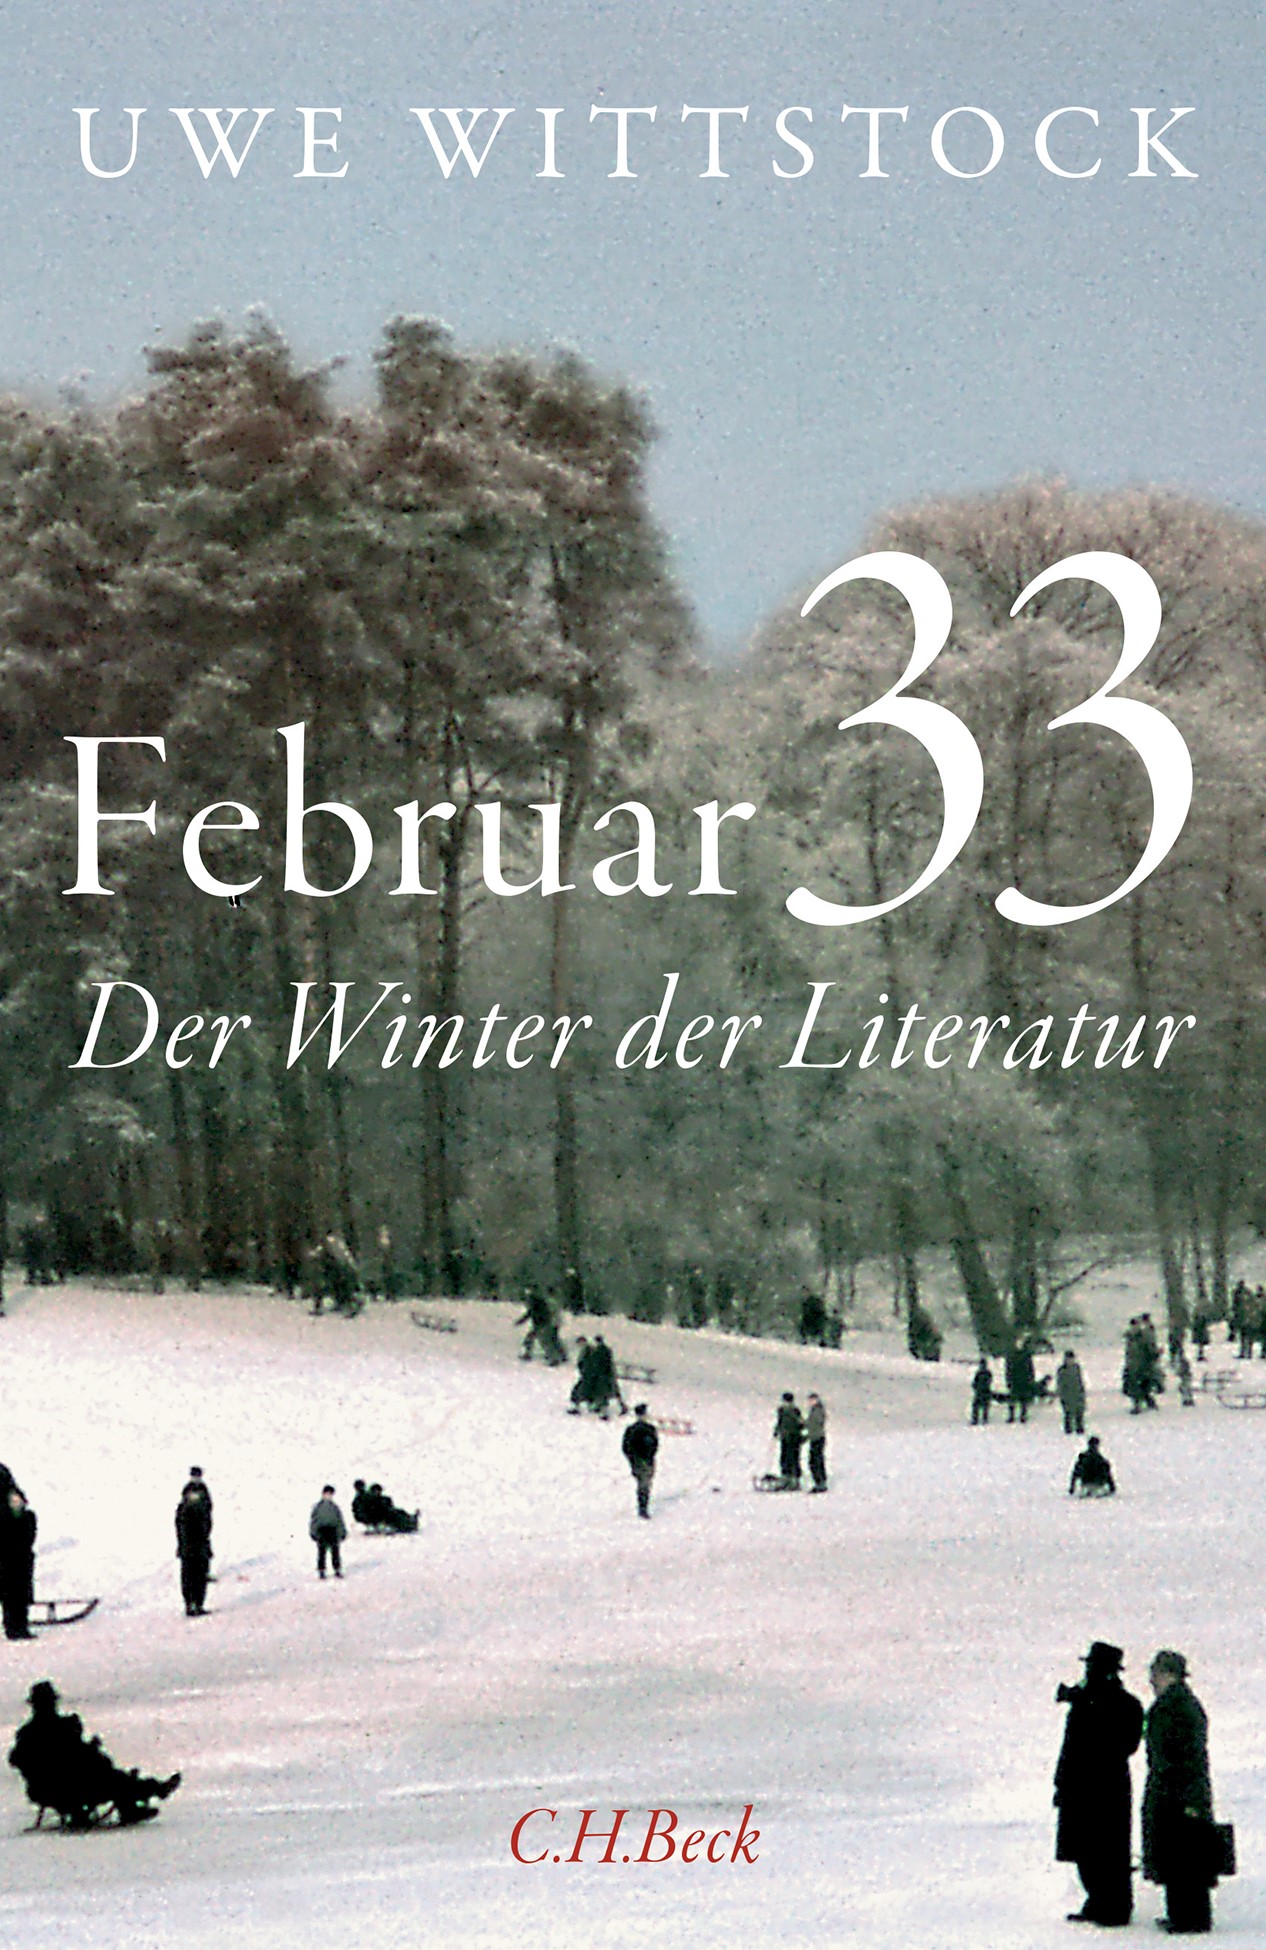 Uwe Wittstock: Februar 33 (German language, 2021, C.H. Beck)